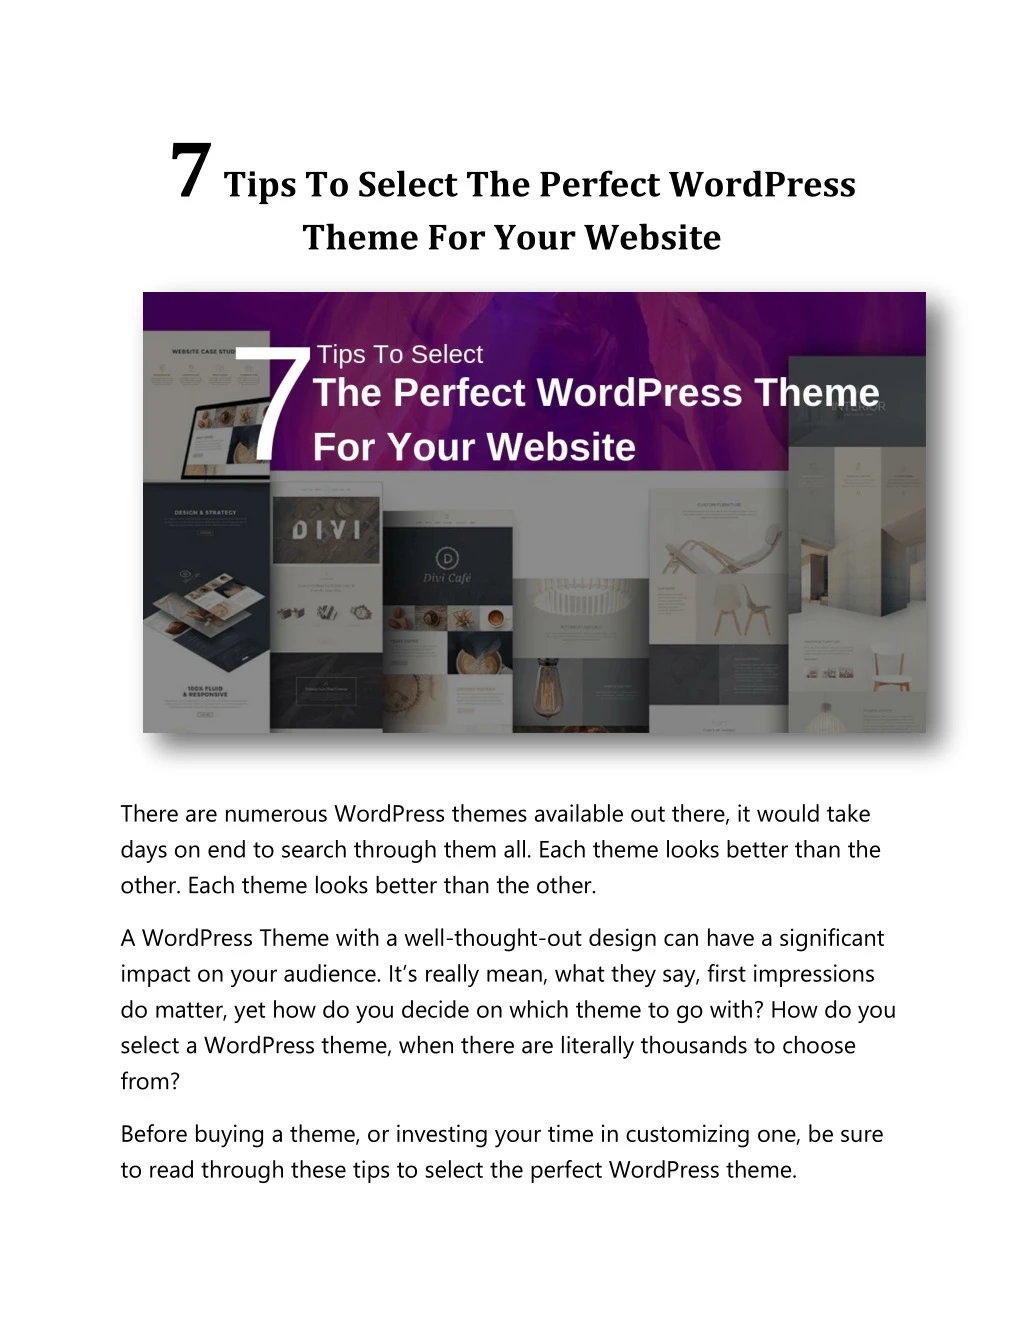 7 tips to select the perfect wordpress theme